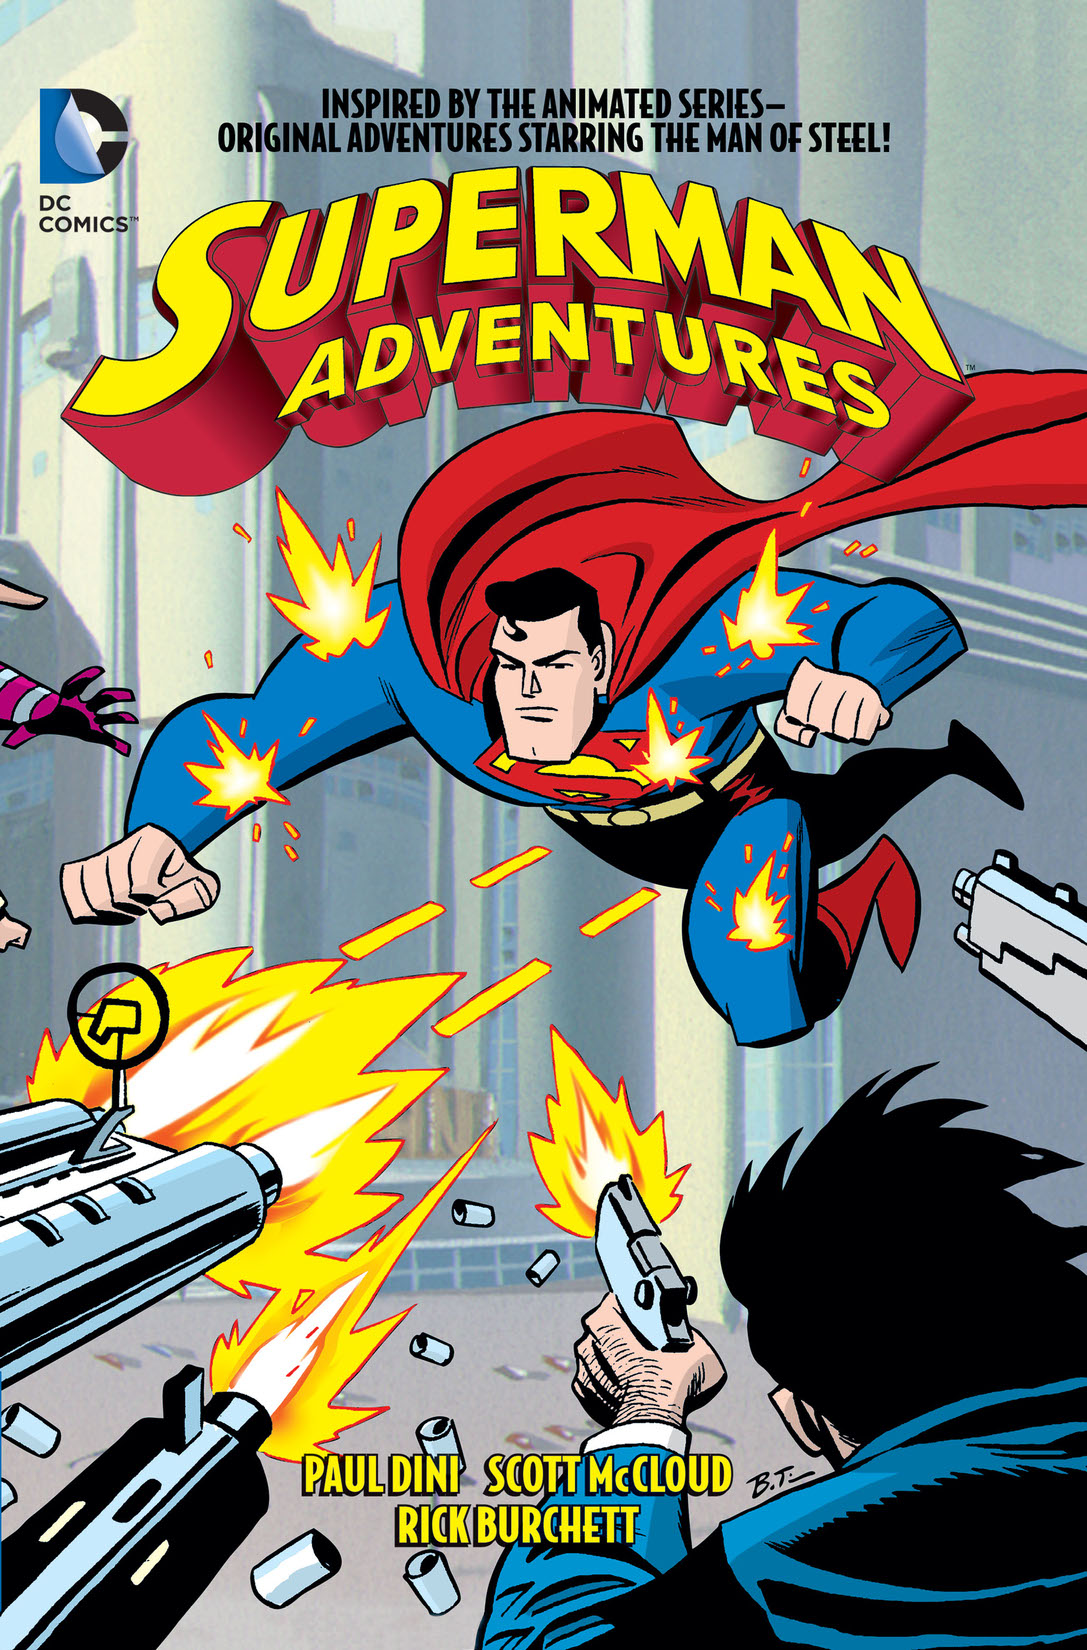 Superman Adventures Vol. 1 preview images